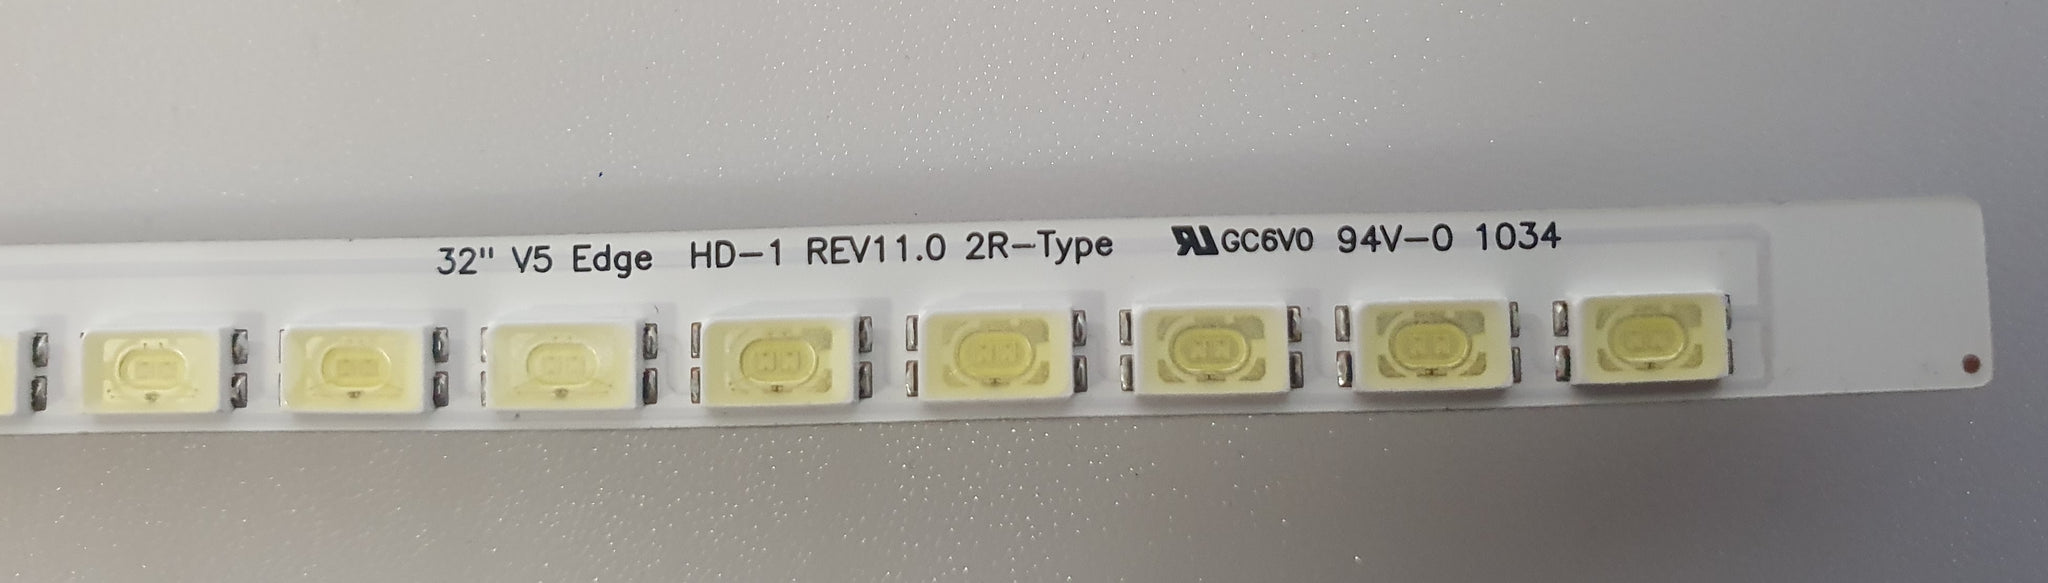 V5 Edge HD-1 REV11/0 2L-Type/ 2R-Type backlight LG 32LE330N